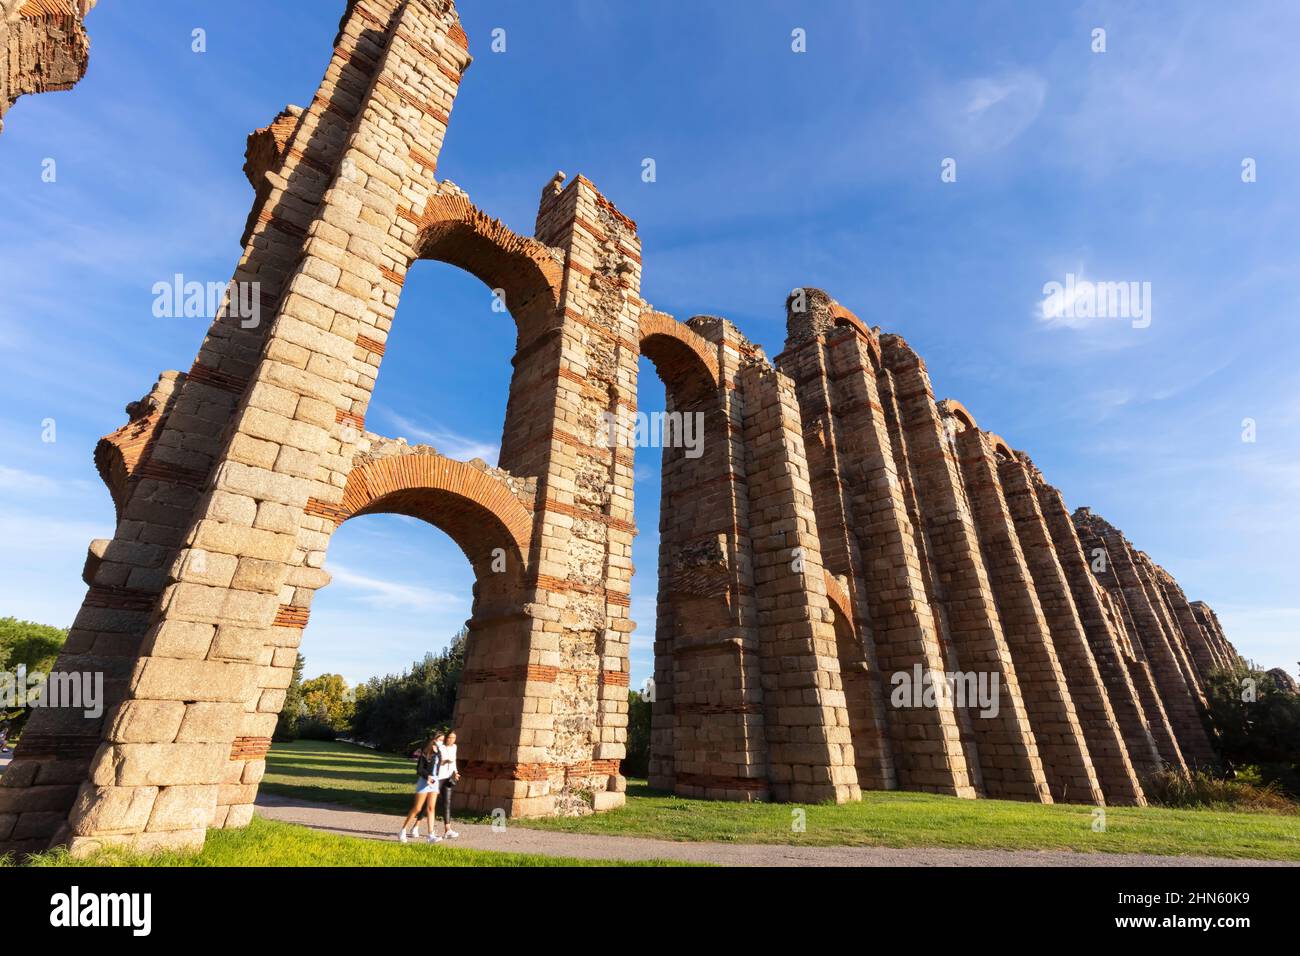 L'Acueducto de los Milagros est les ruines d'un pont d'aqueduc romain dans la ville de Merida, en Espagne Banque D'Images